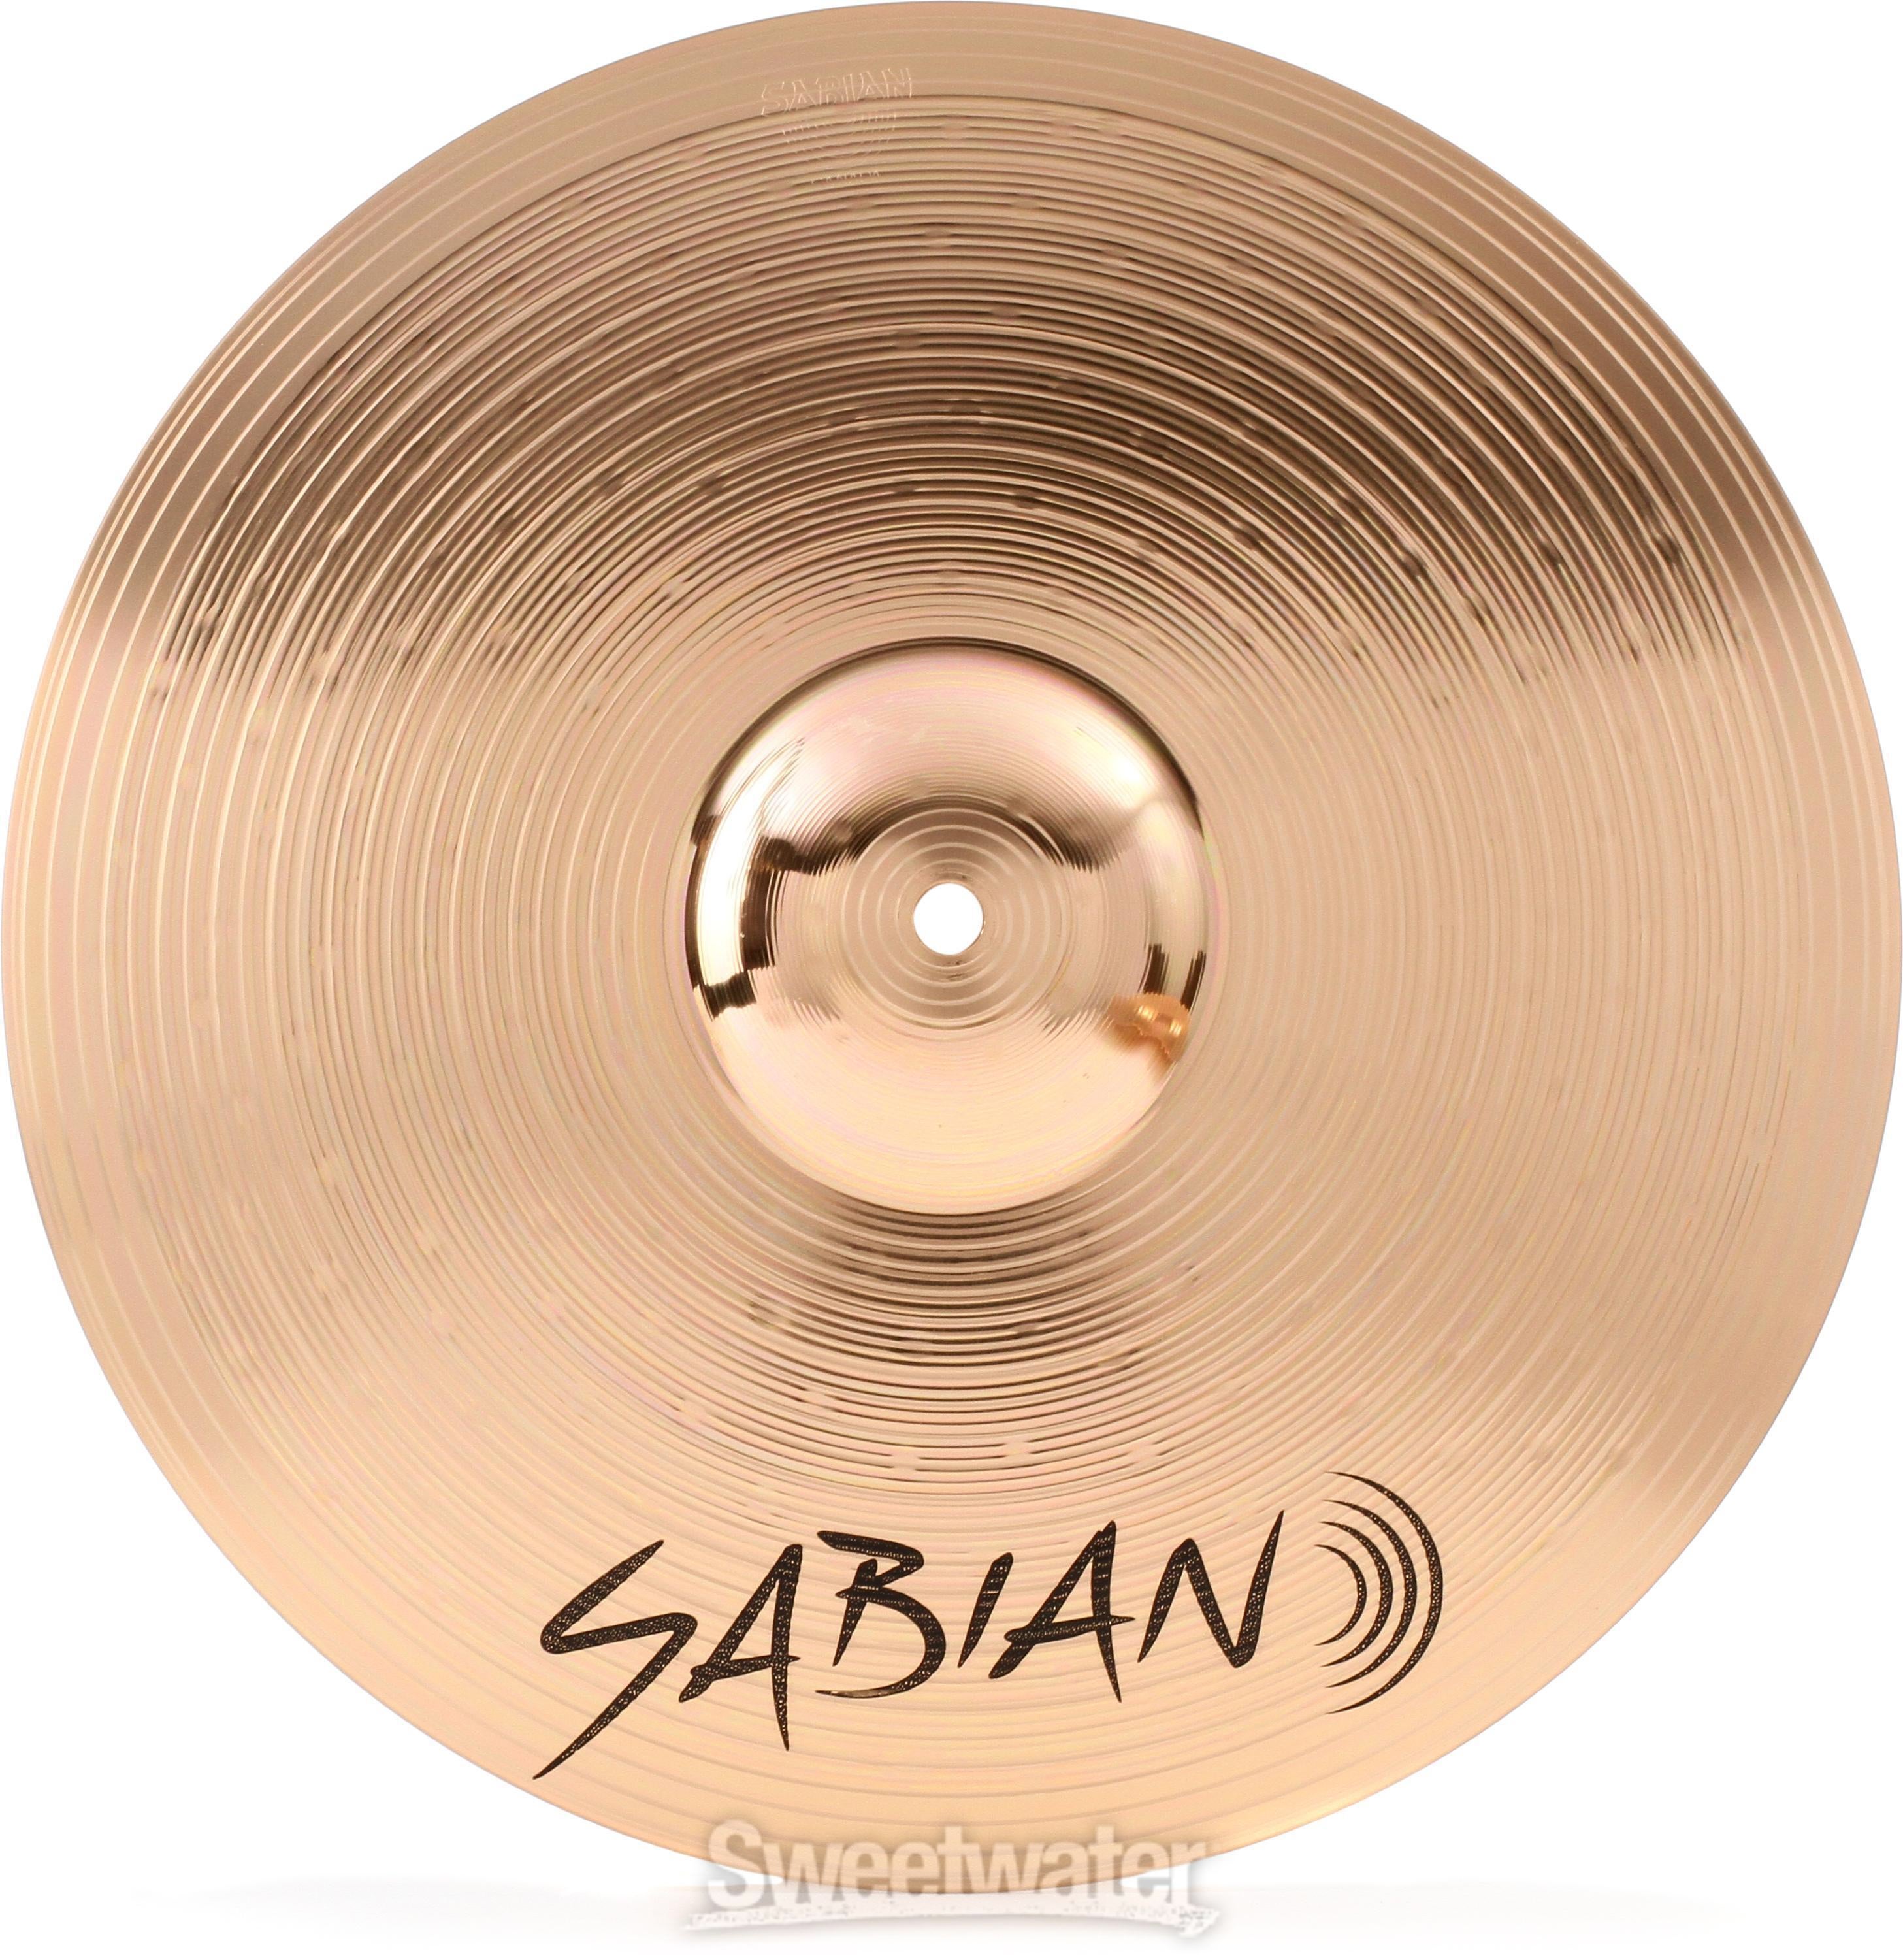 Sabian B8X Performance Cymbal Set - 14/16/20 inch - with Free 18